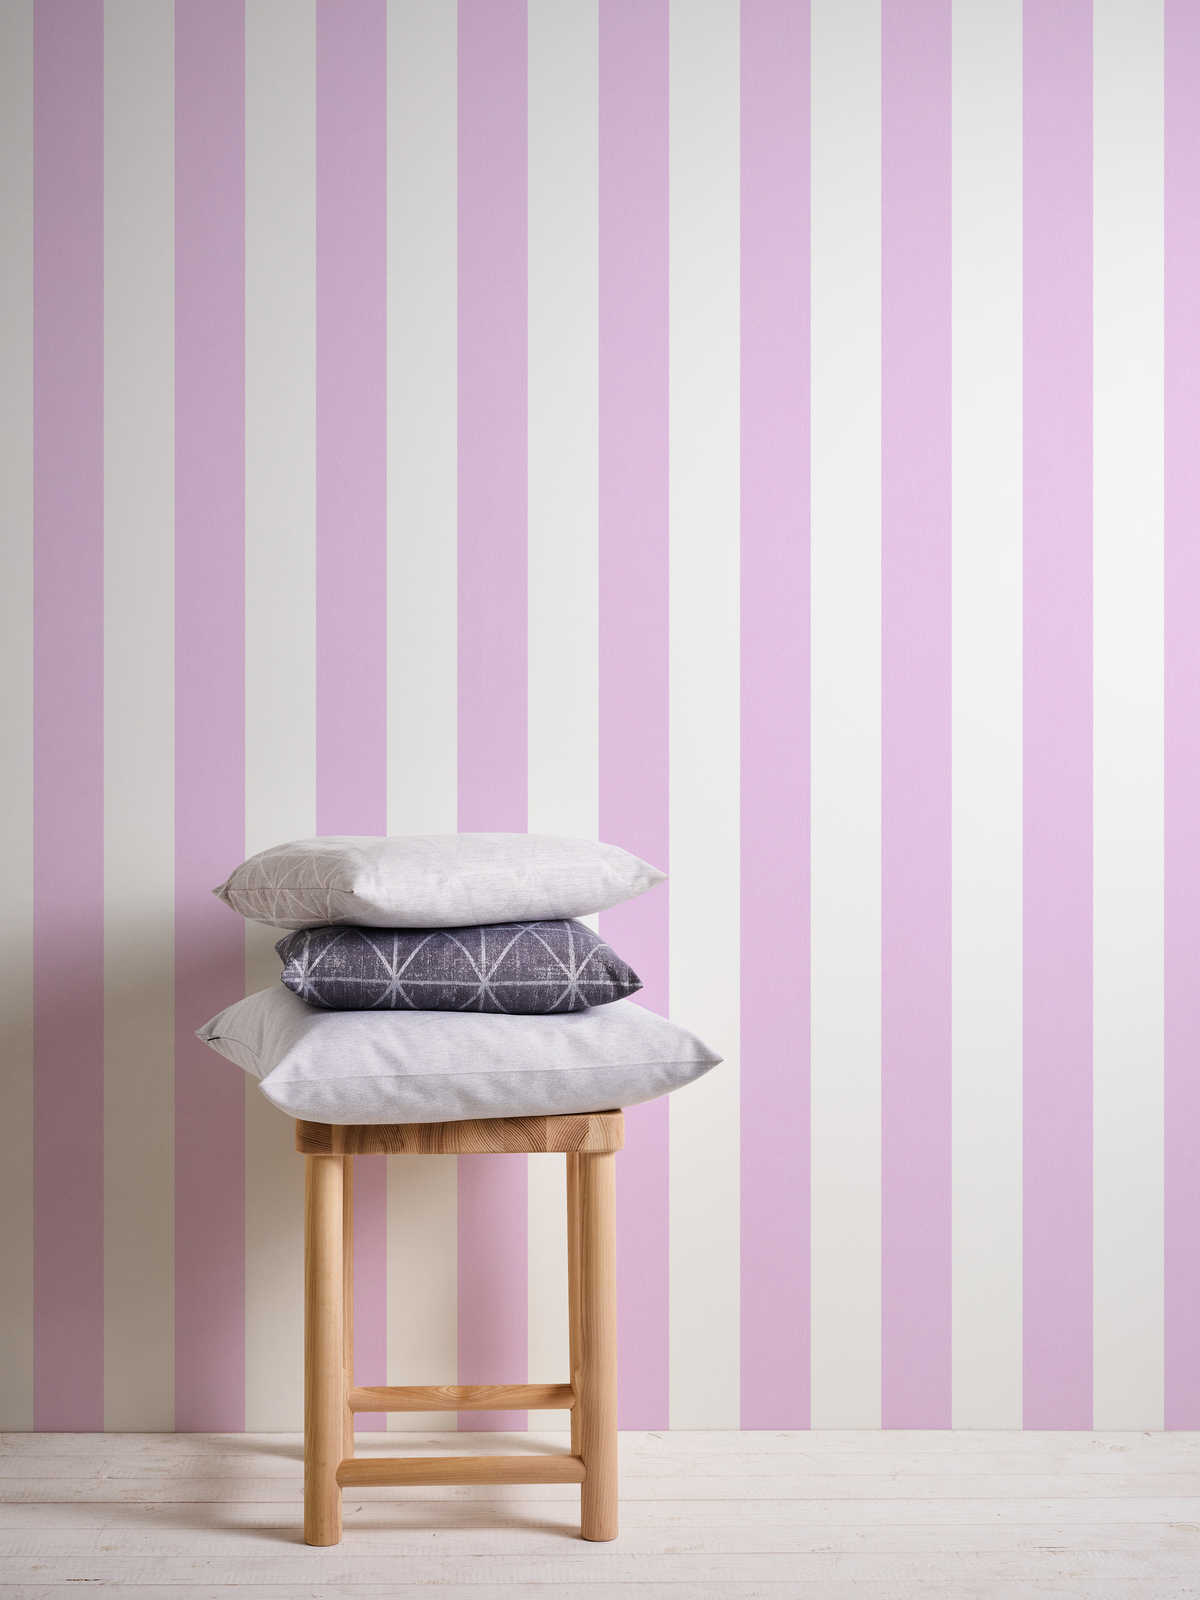             Papel pintado habitación infantil niñas rayas verticales - rosa, blanco
        